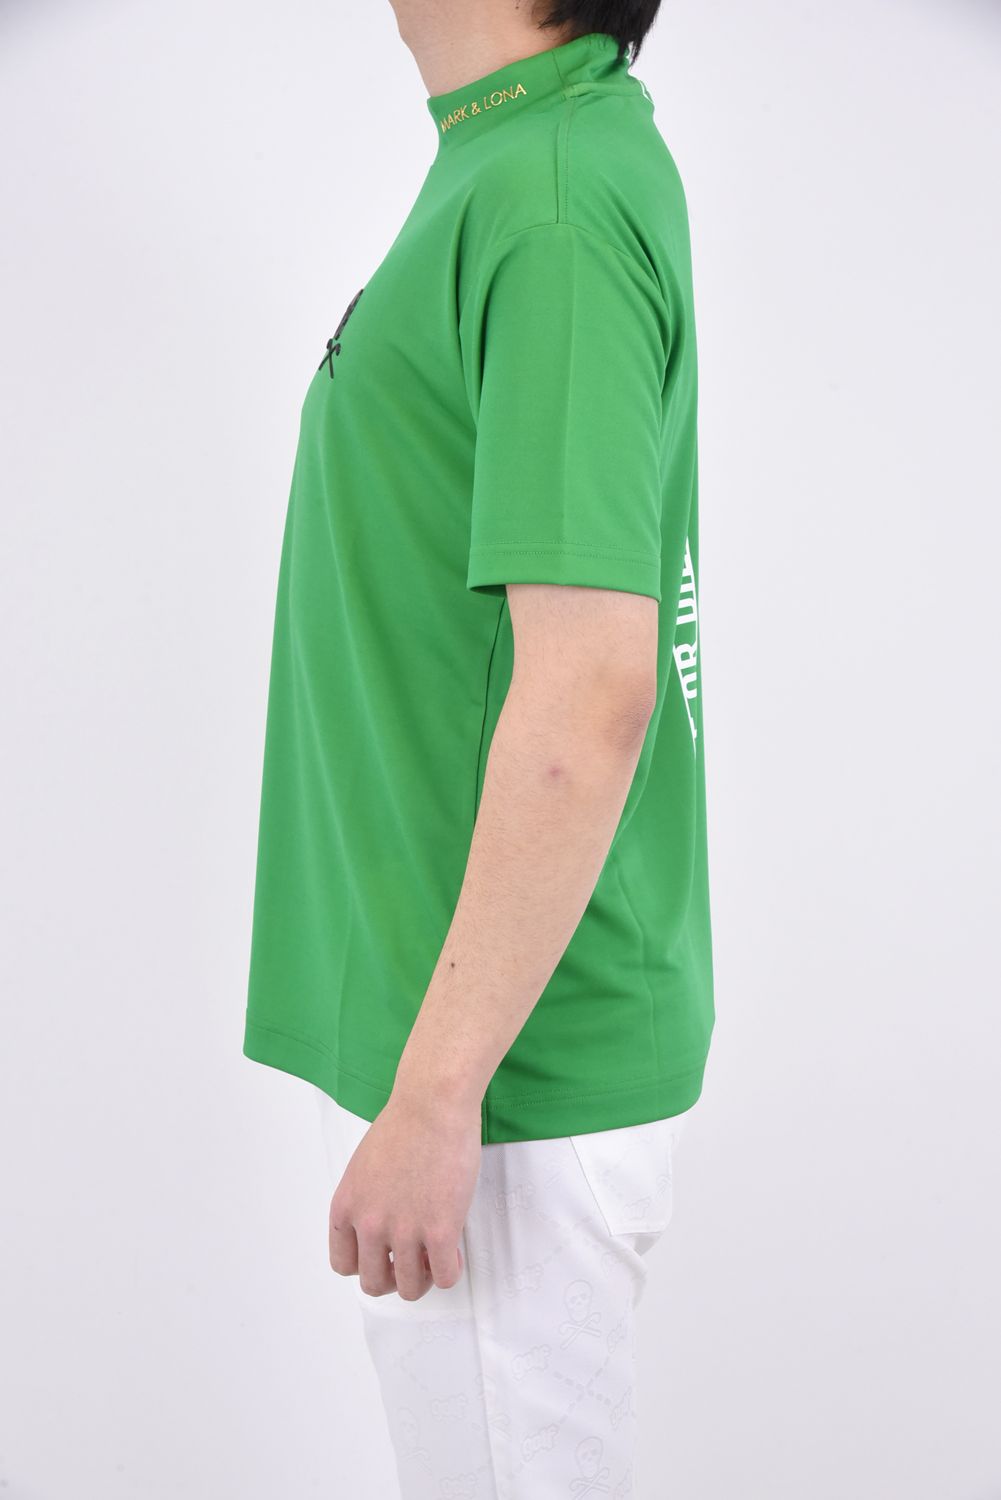 JADED MOCK NECK TOP / 3Dブランドロゴ アイアンスカル 半袖モックネックTシャツ グリーン - 44(S)